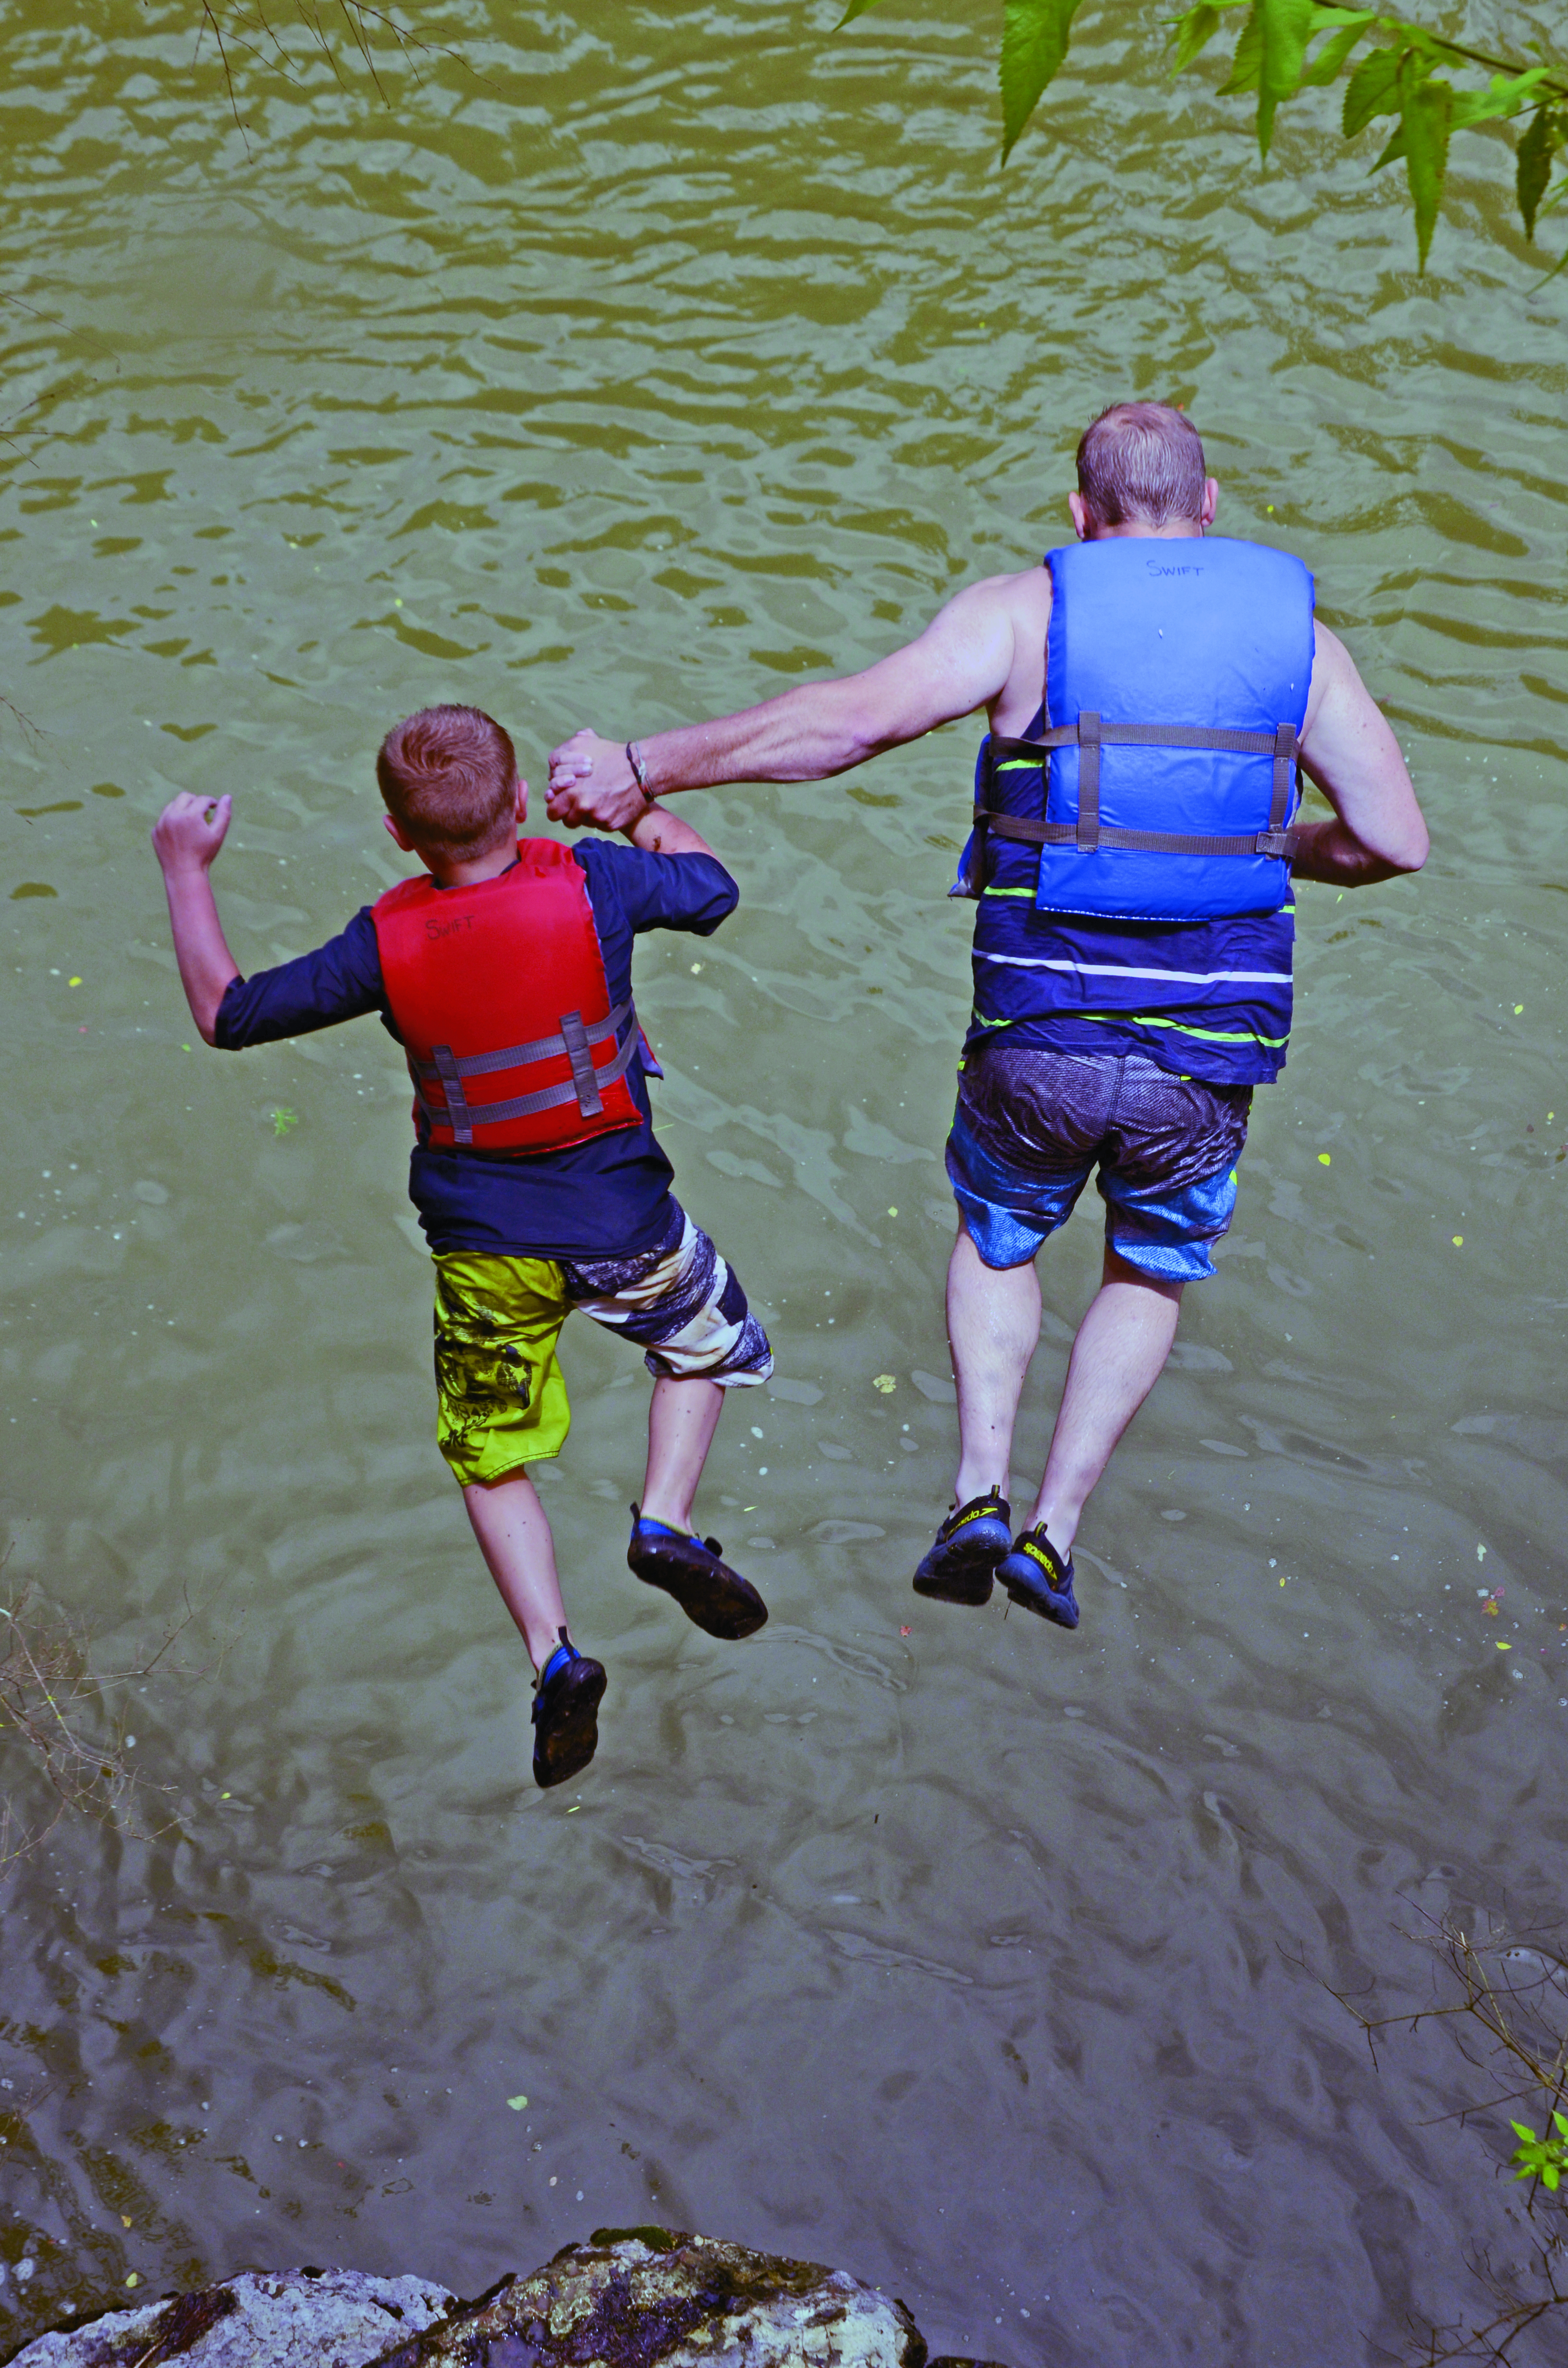 Participants in Paddle Georgia 2017 take a leap of faith into the Etowah River. (Photo/Joe Cook)